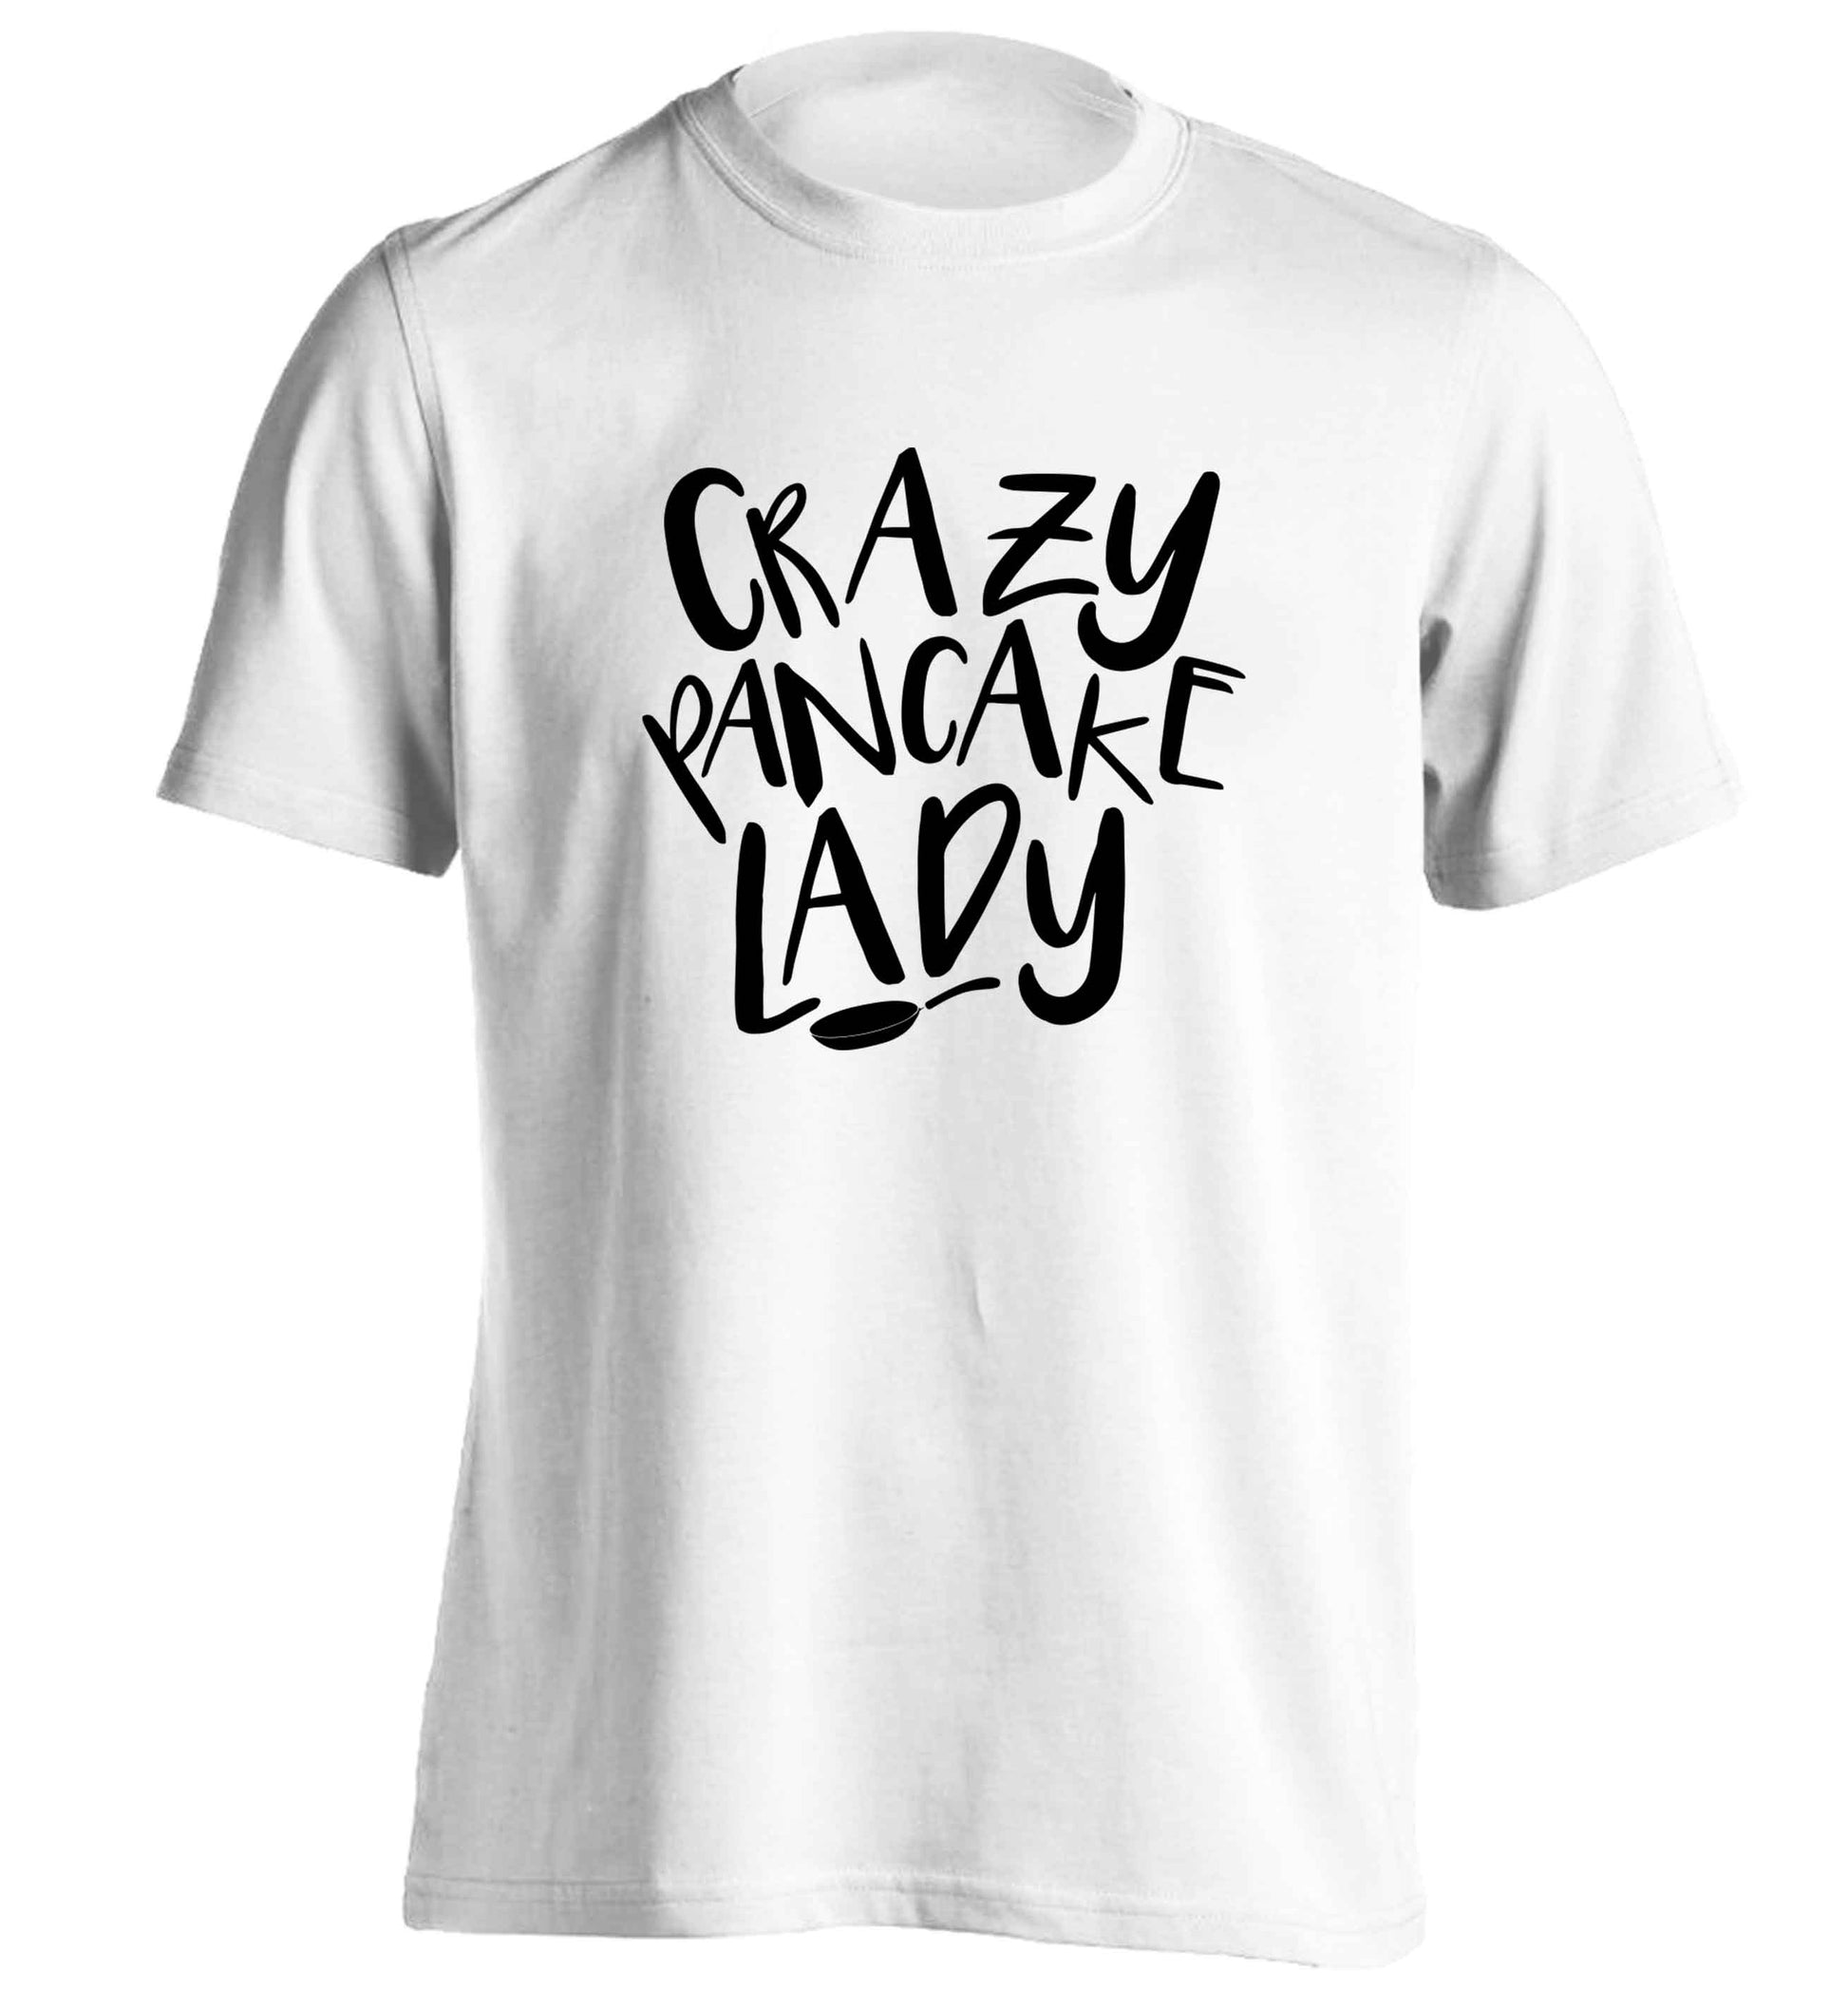 Crazy pancake lady adults unisex white Tshirt 2XL